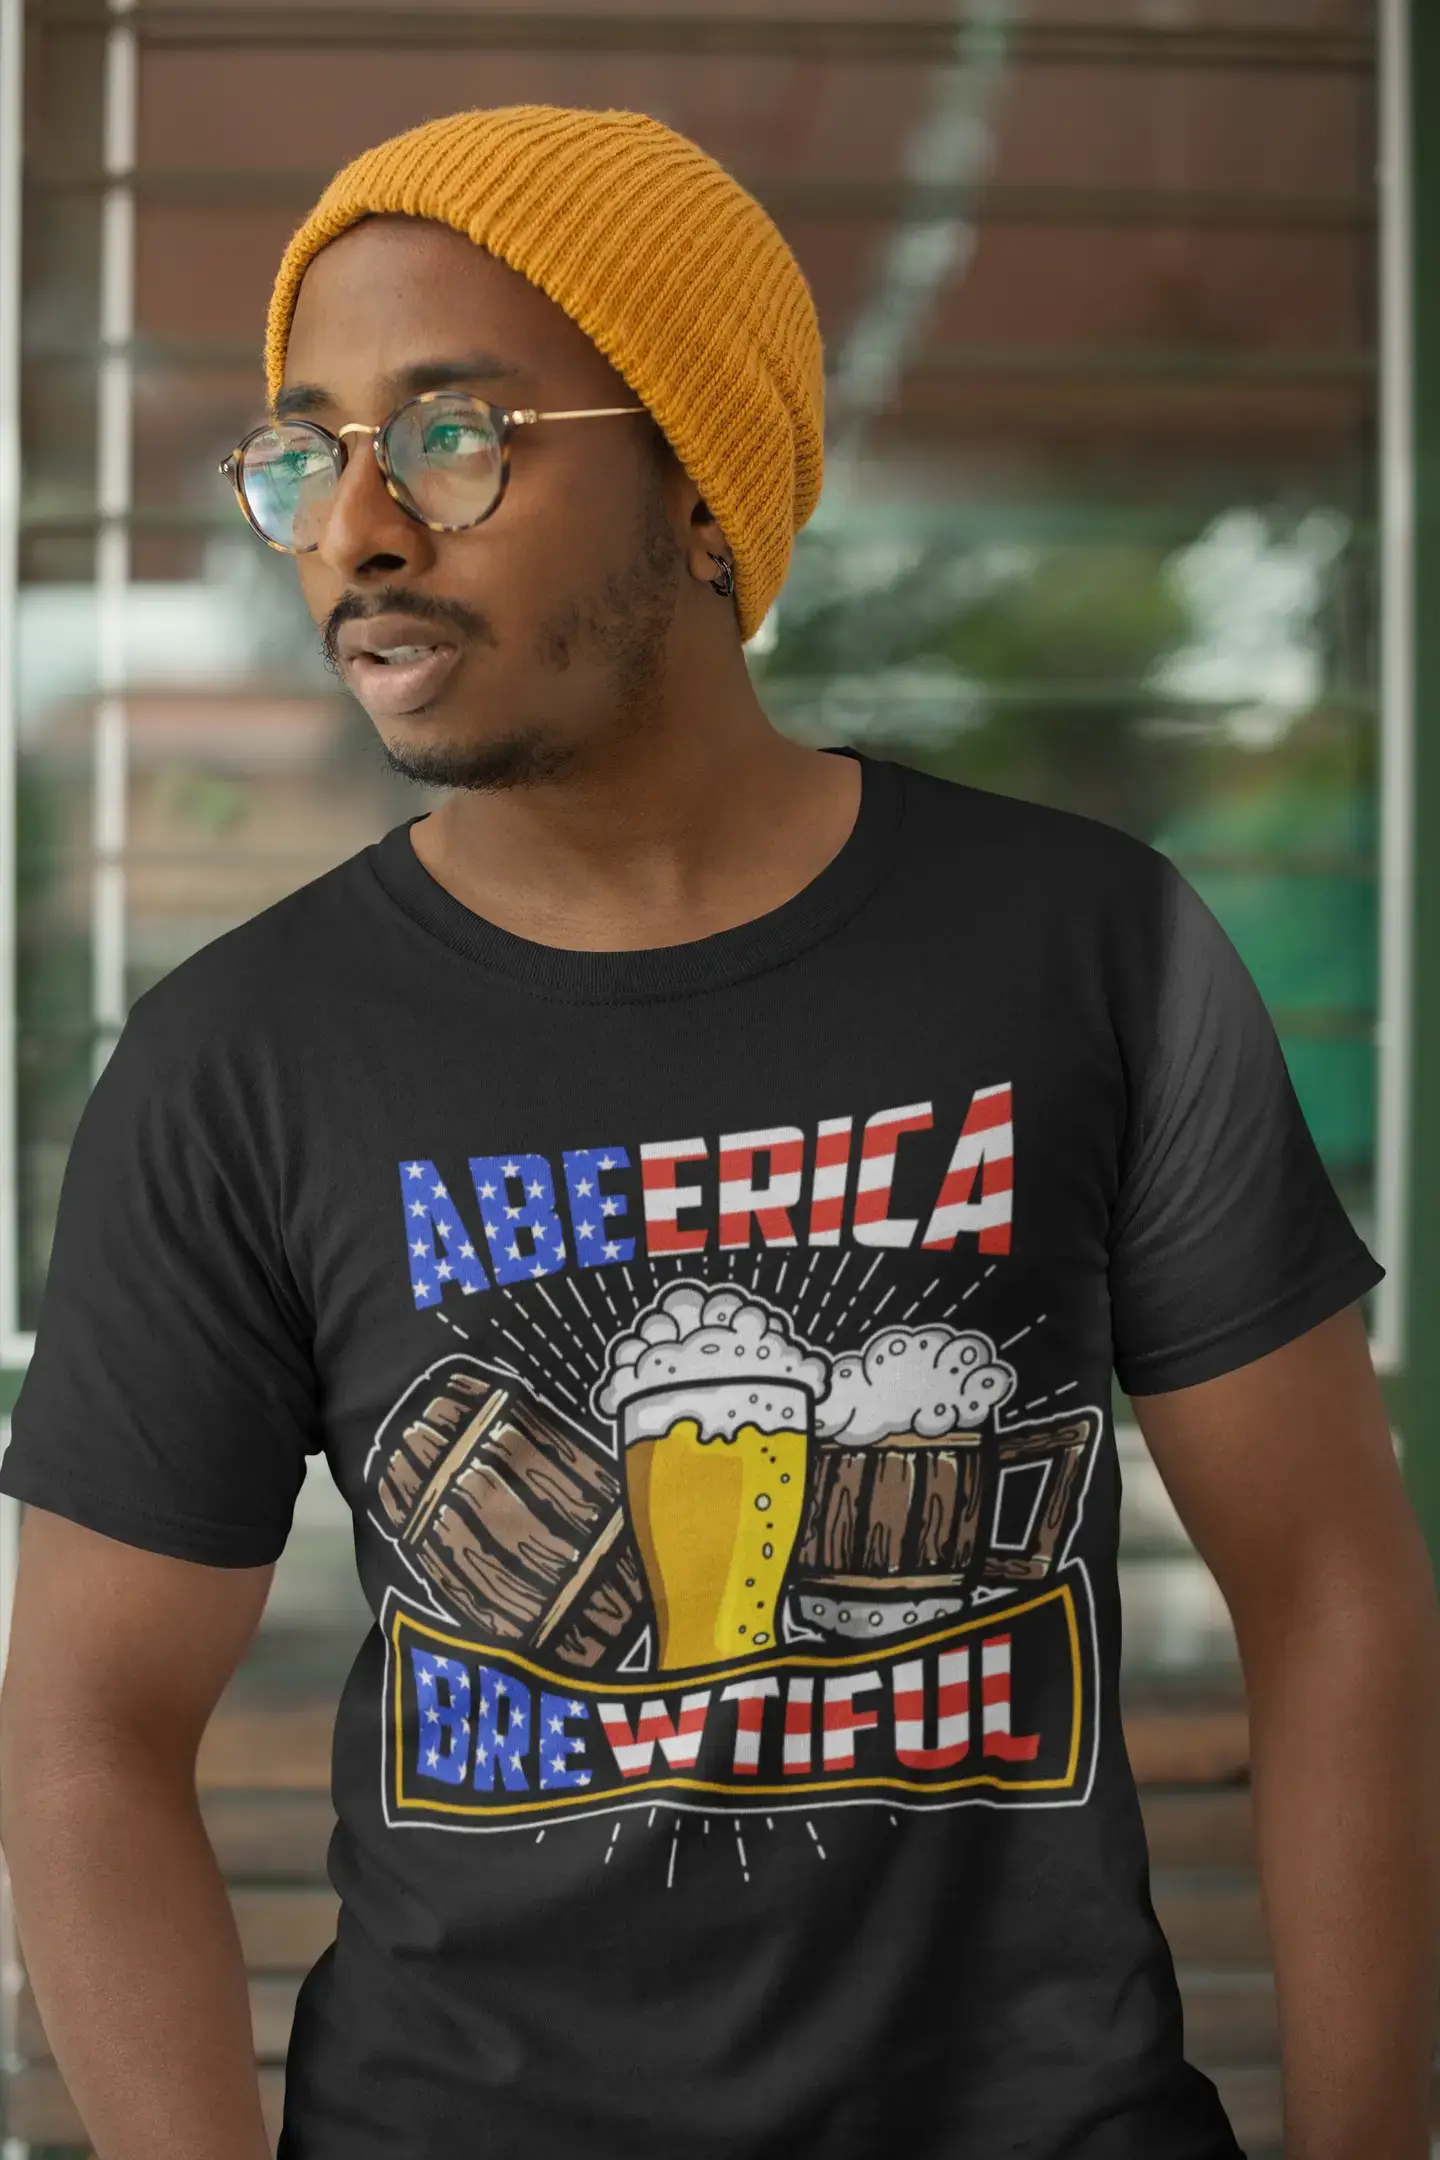 ULTRABASIC Men's Funny T-Shirt Abeerica Brewtiful - American Flag Beer Lover Tee Shirt